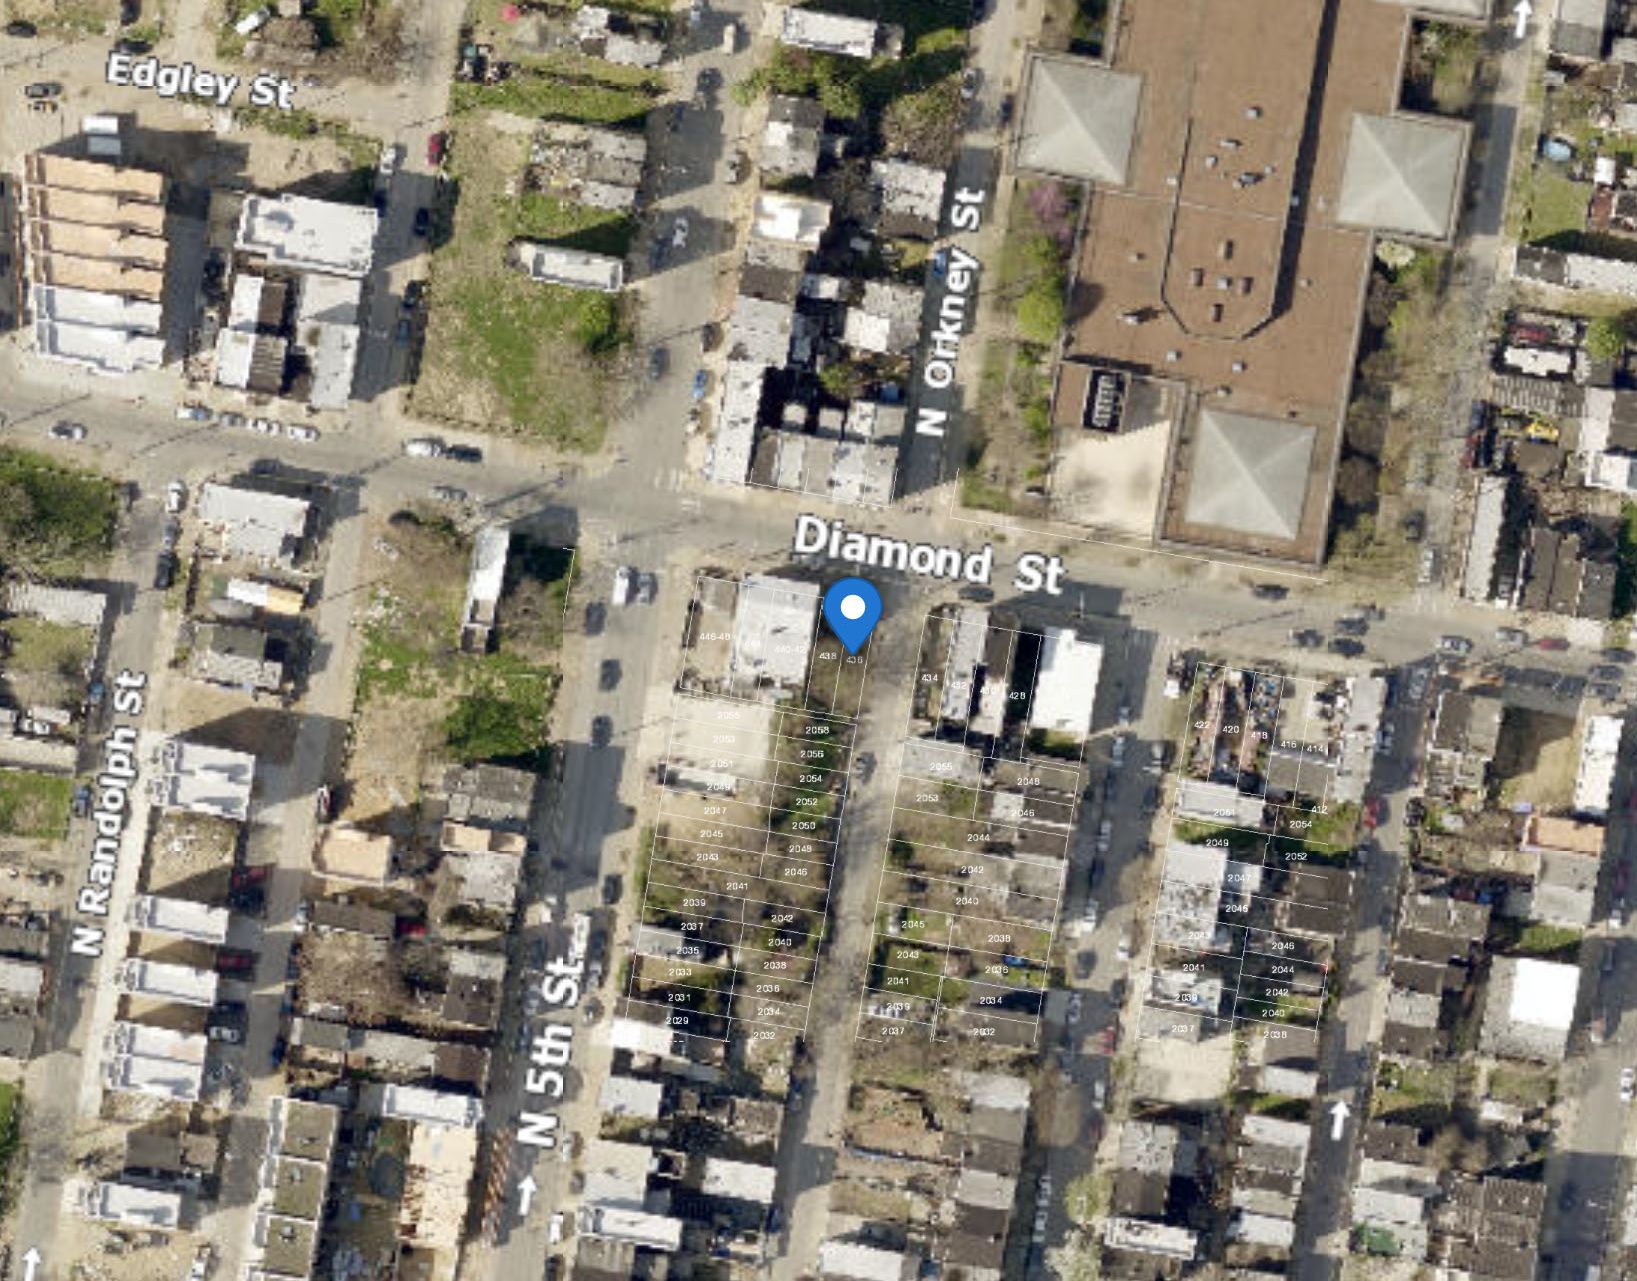 436 Diamond Street. Aerial view. Credit: SanBarDesign via the City of Philadelphia